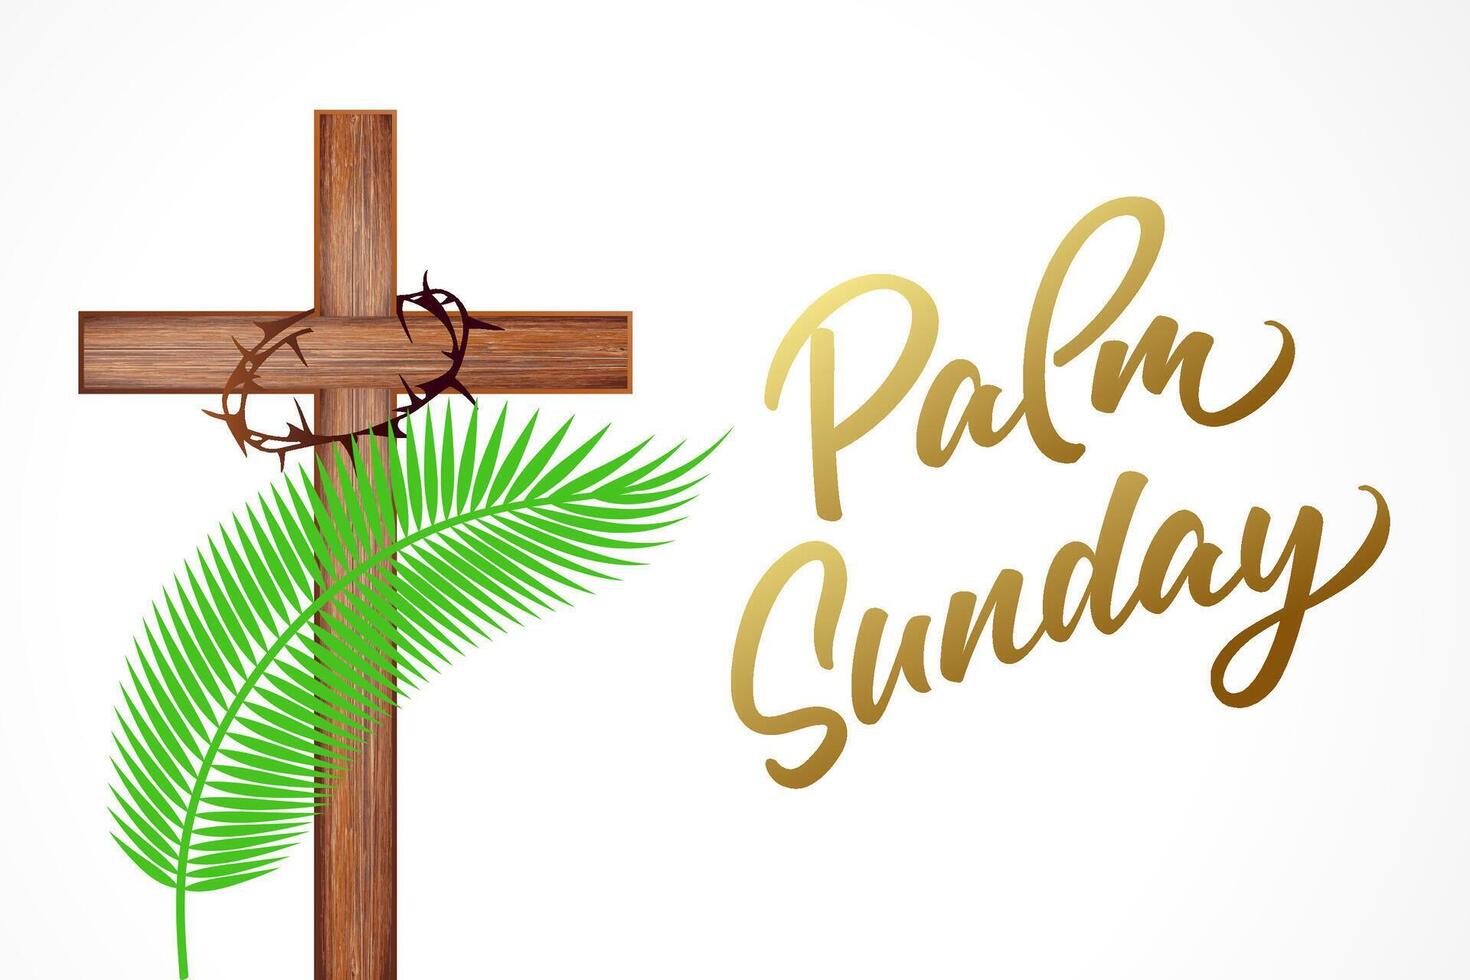 Palme Sonntag Christian Poster mit Kreuz und Palme Blatt. Vektor Illustration